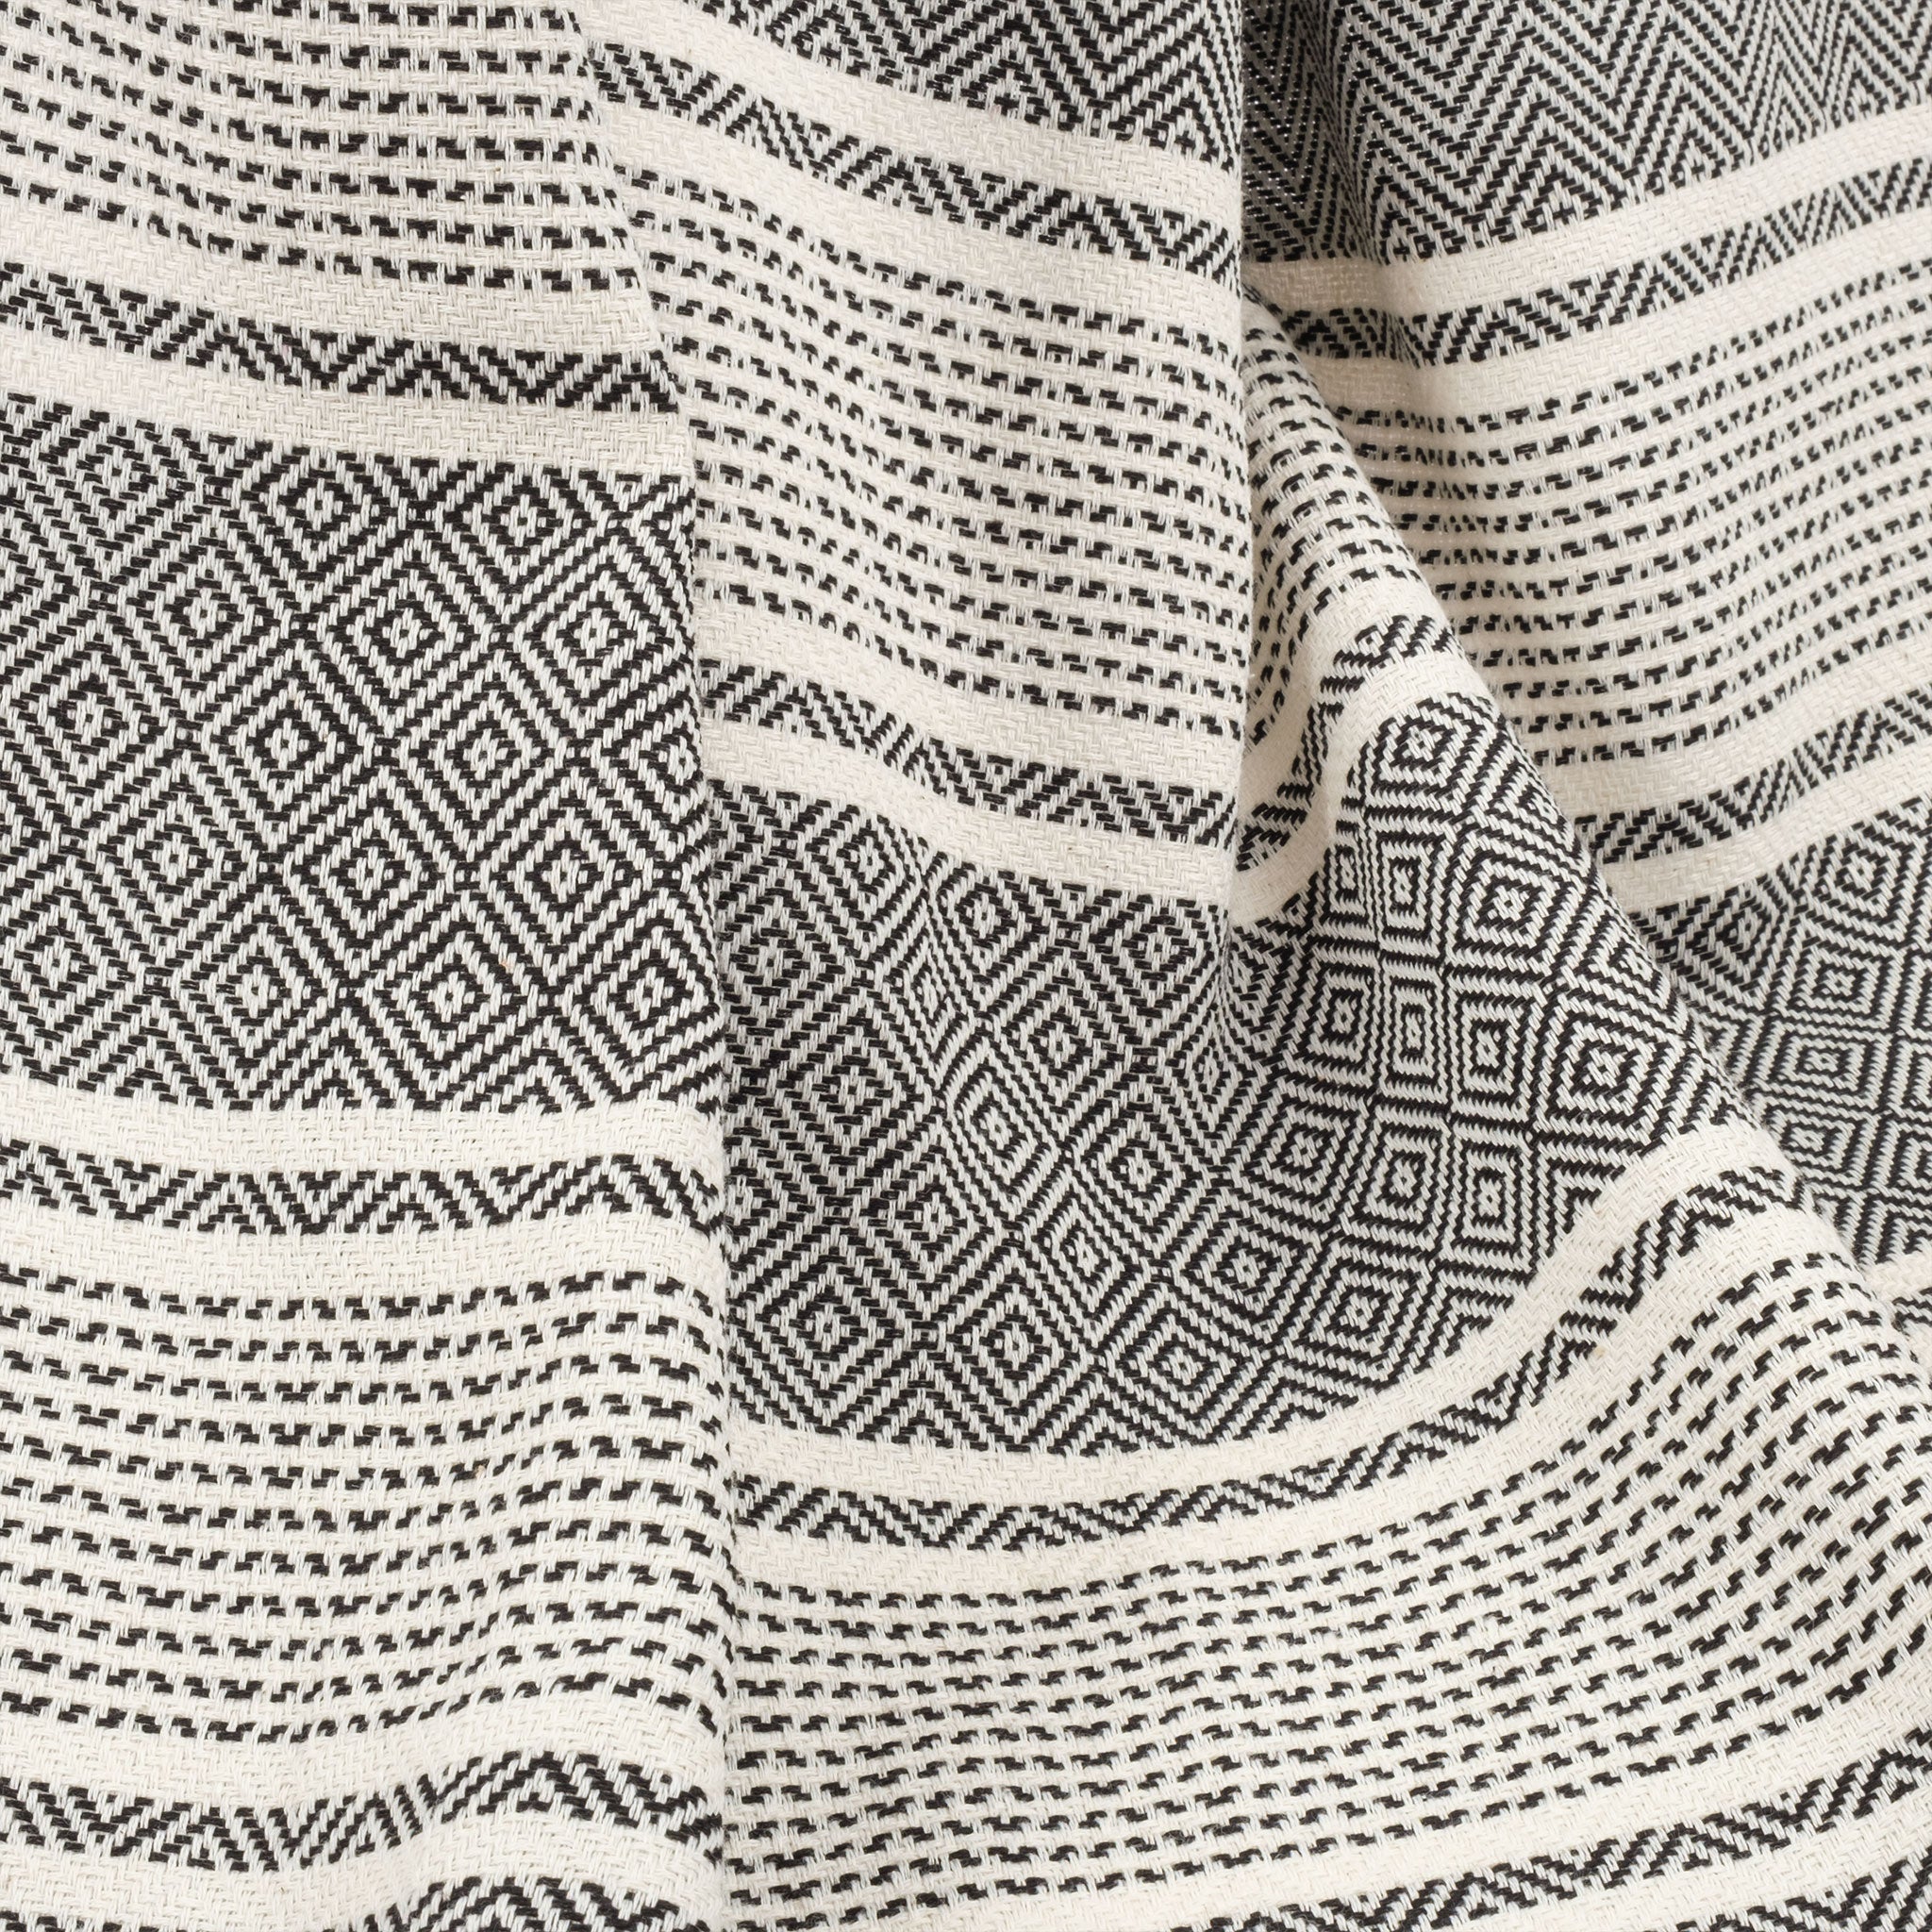 American Soft Linen - 100% Cotton Turkish Peshtemal Towels - 44 Set Case Pack - Black-Striped - 2